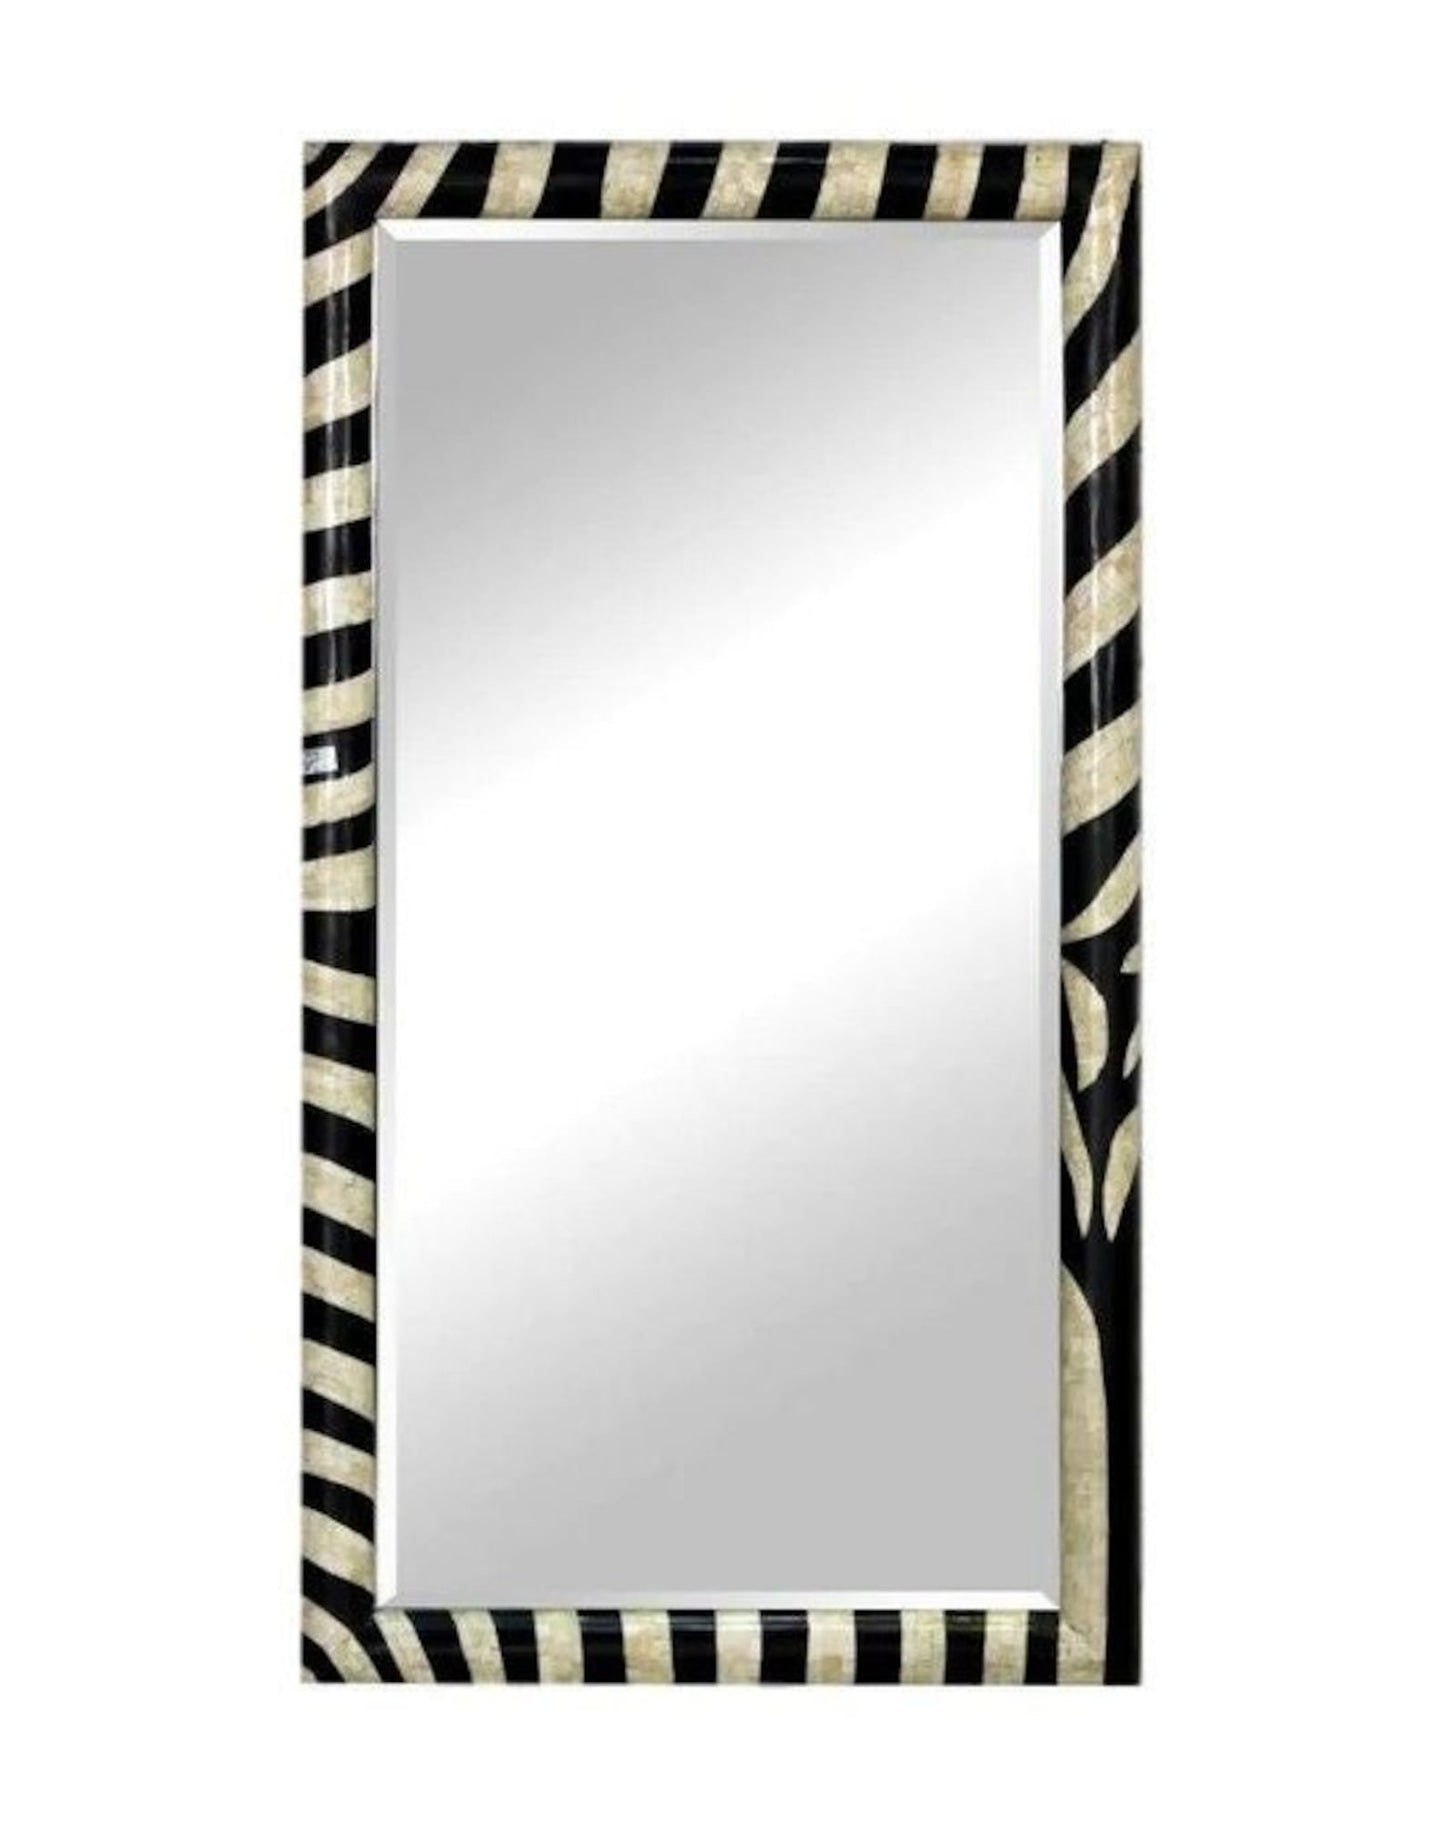 Bone Inlay Mirror Zebra Pattern Mirror Frame Wall Decor, Bathroom Mirror Home Decor Furniture